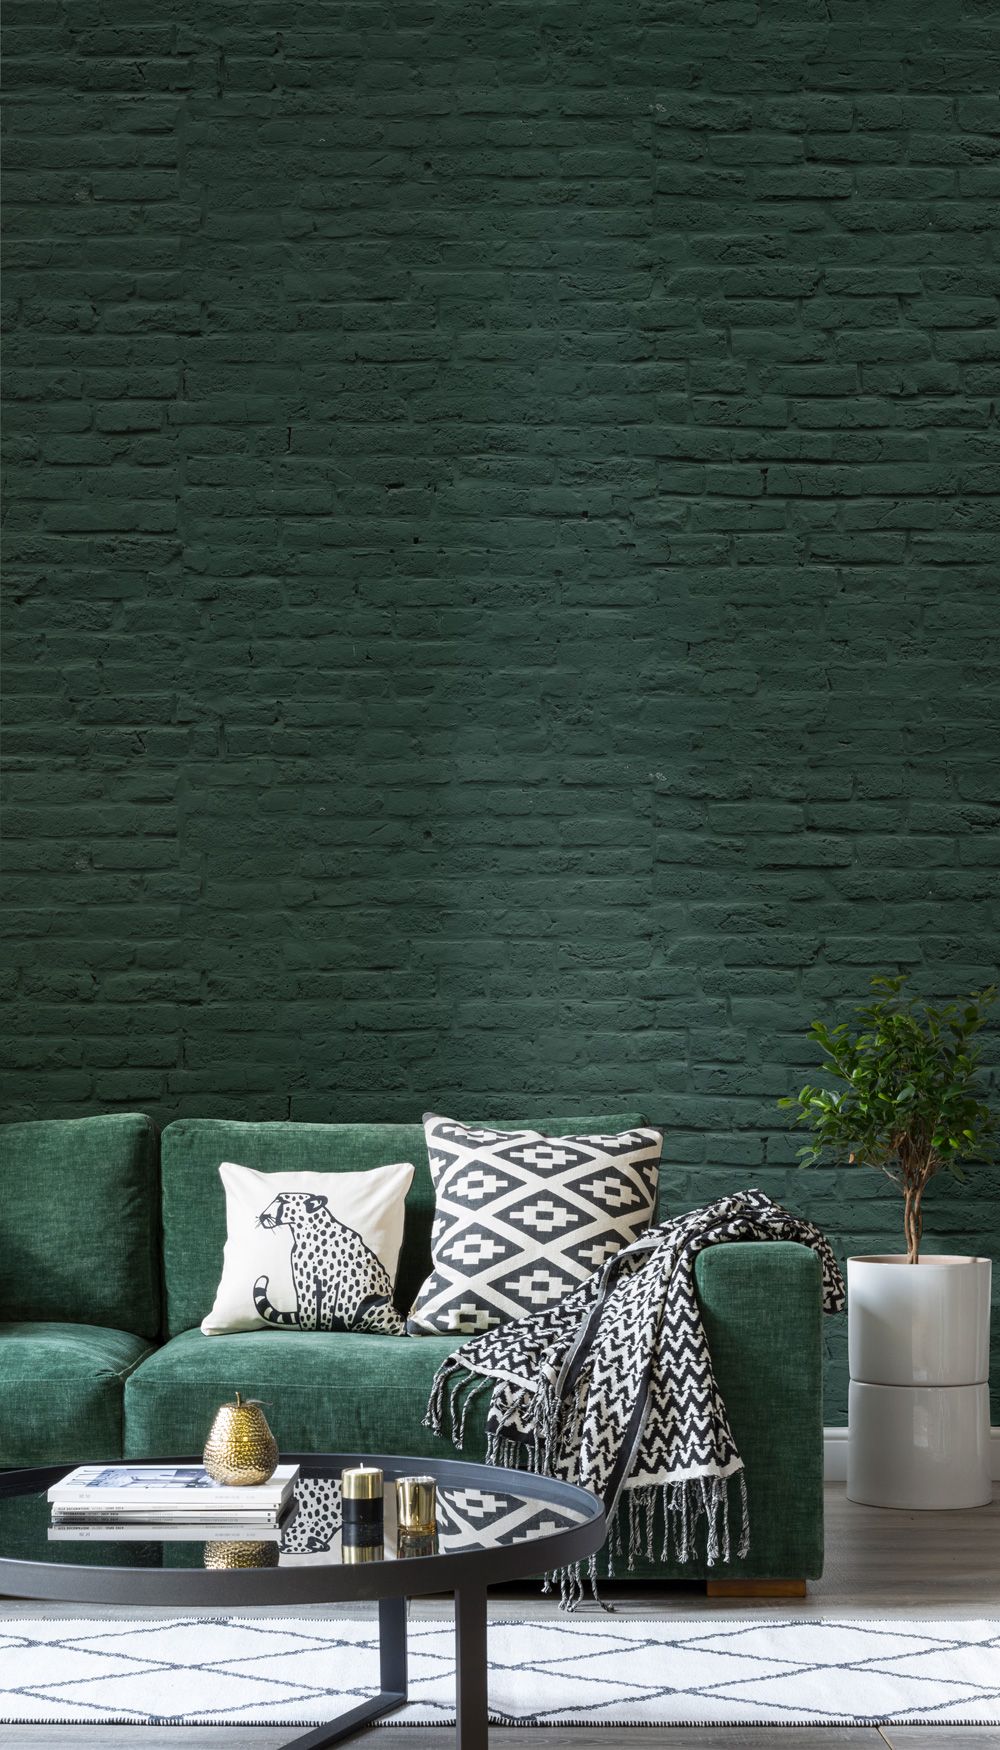 Stylish Brick Effect Wallpaper Designs Brick Wallpaper Ideas